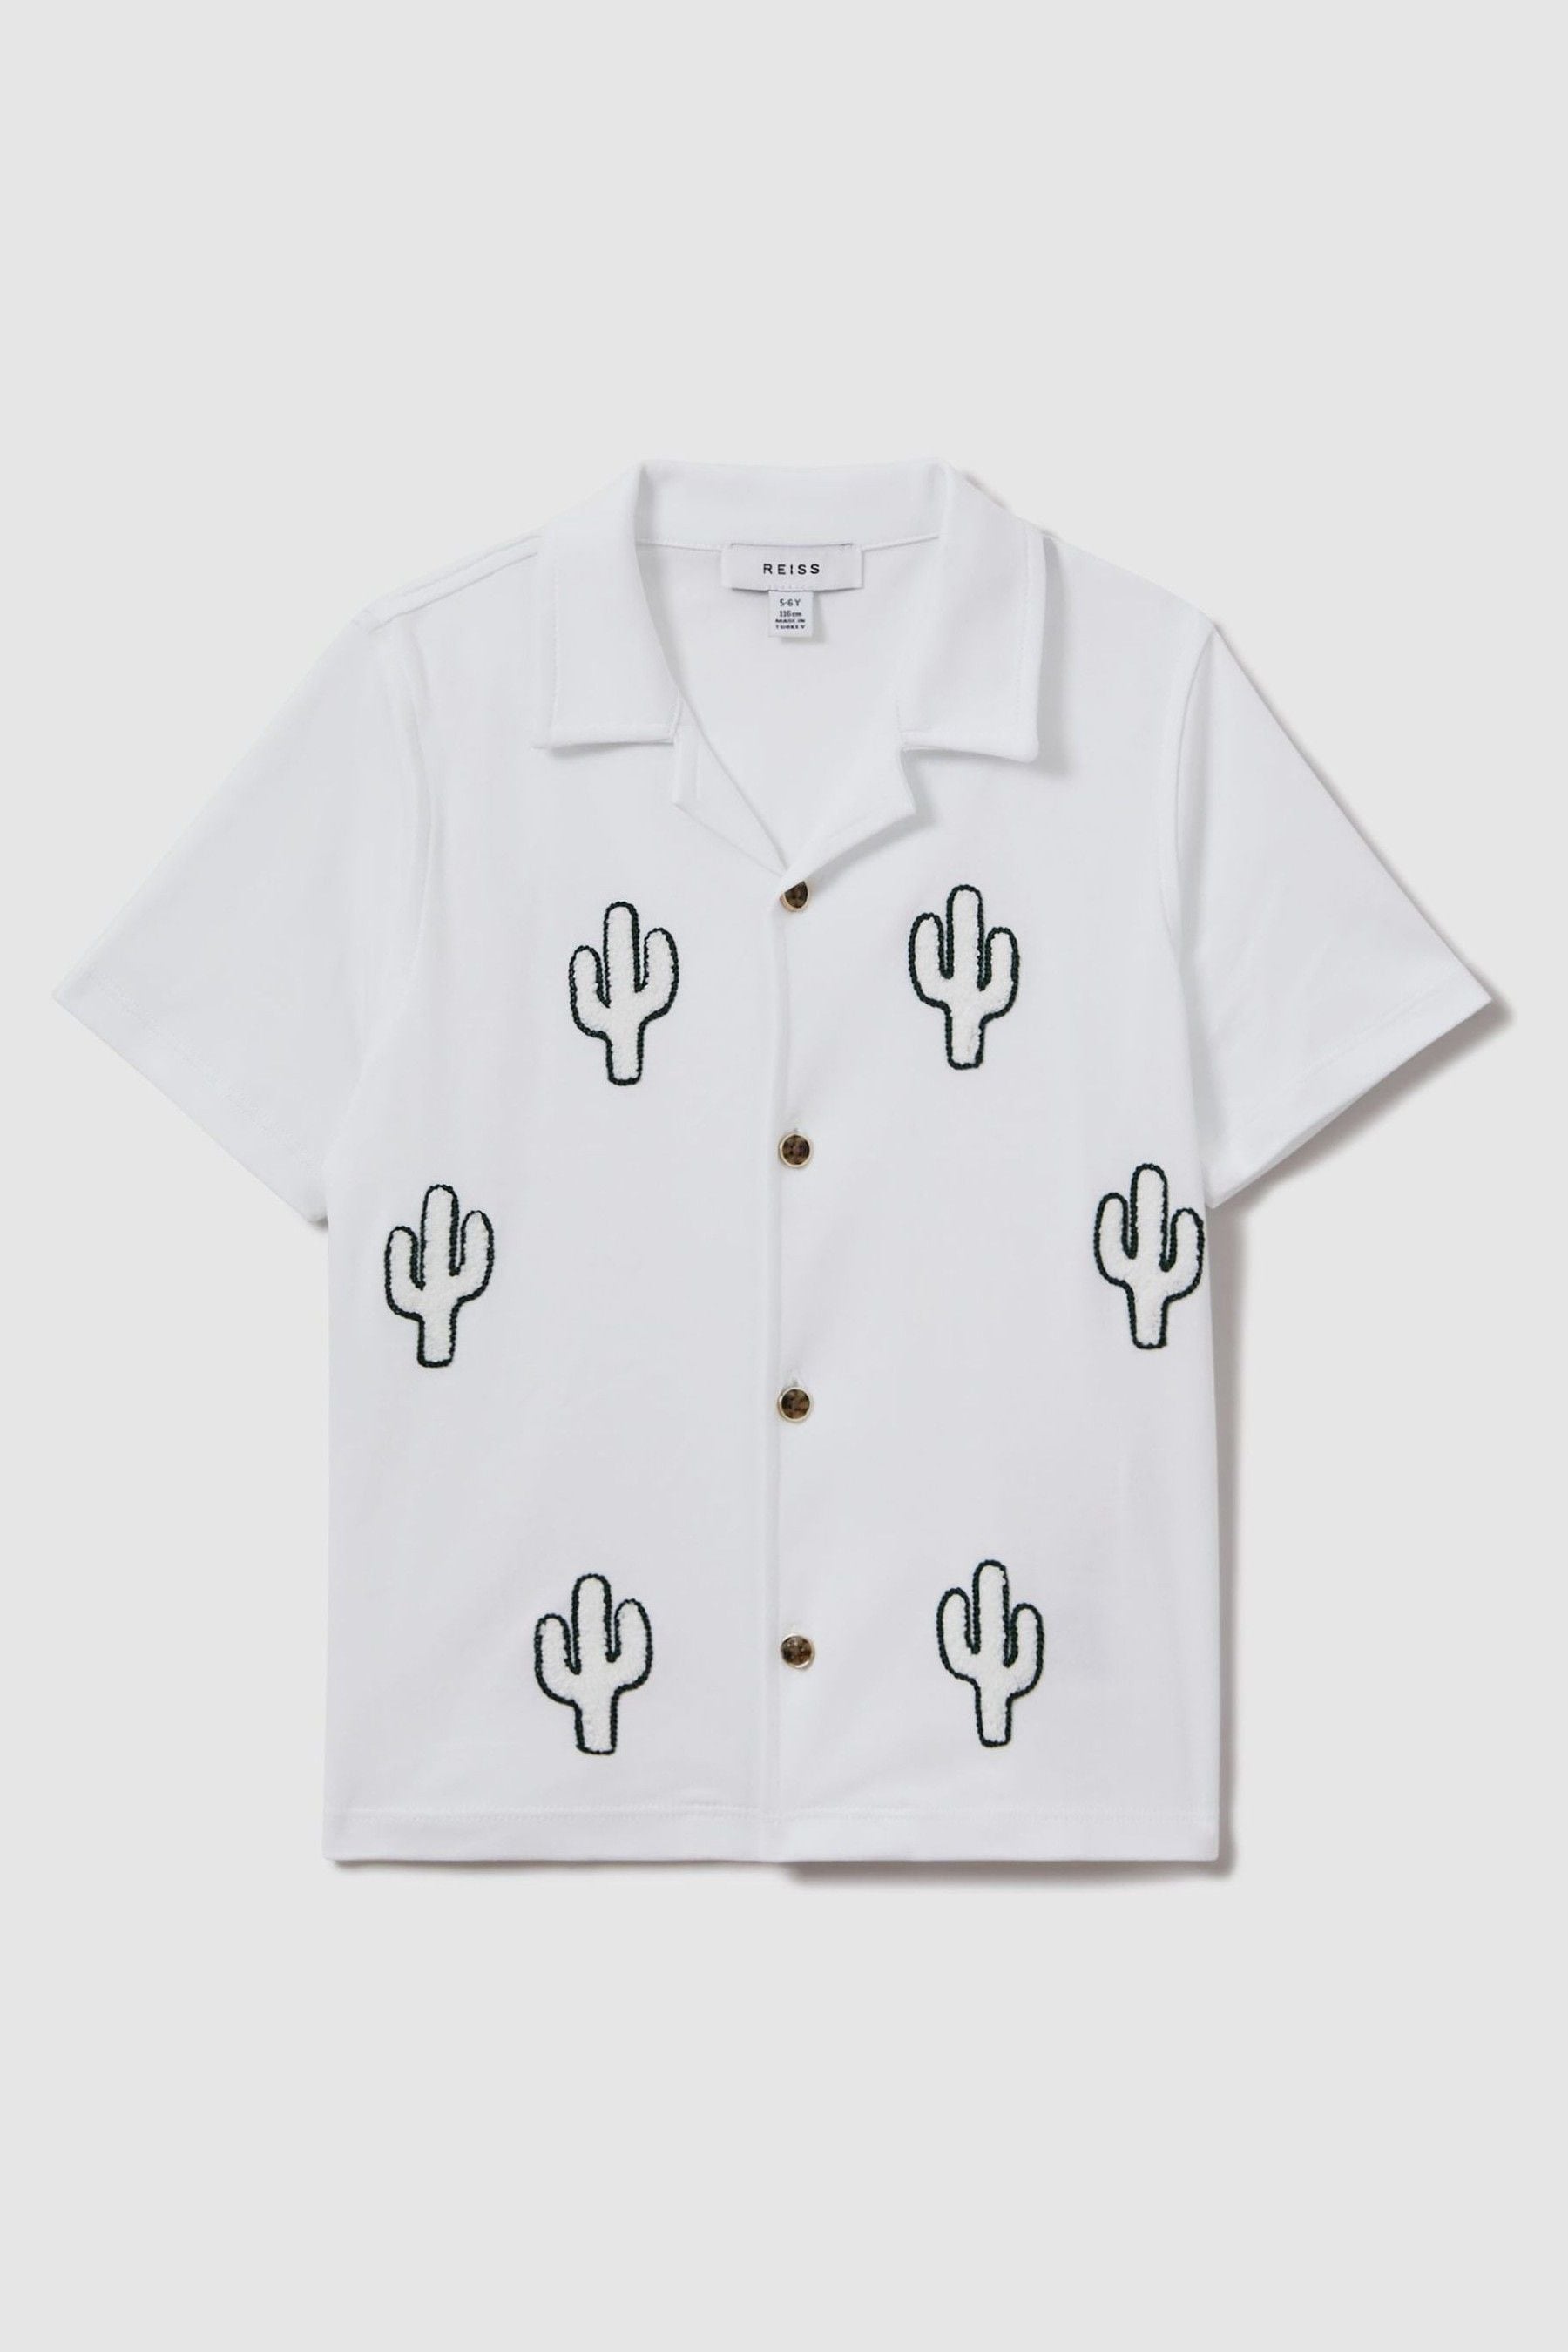 Reiss Aurora - White Cotton Cactus Cuban Collar Shirt, Uk 13-14 Yrs